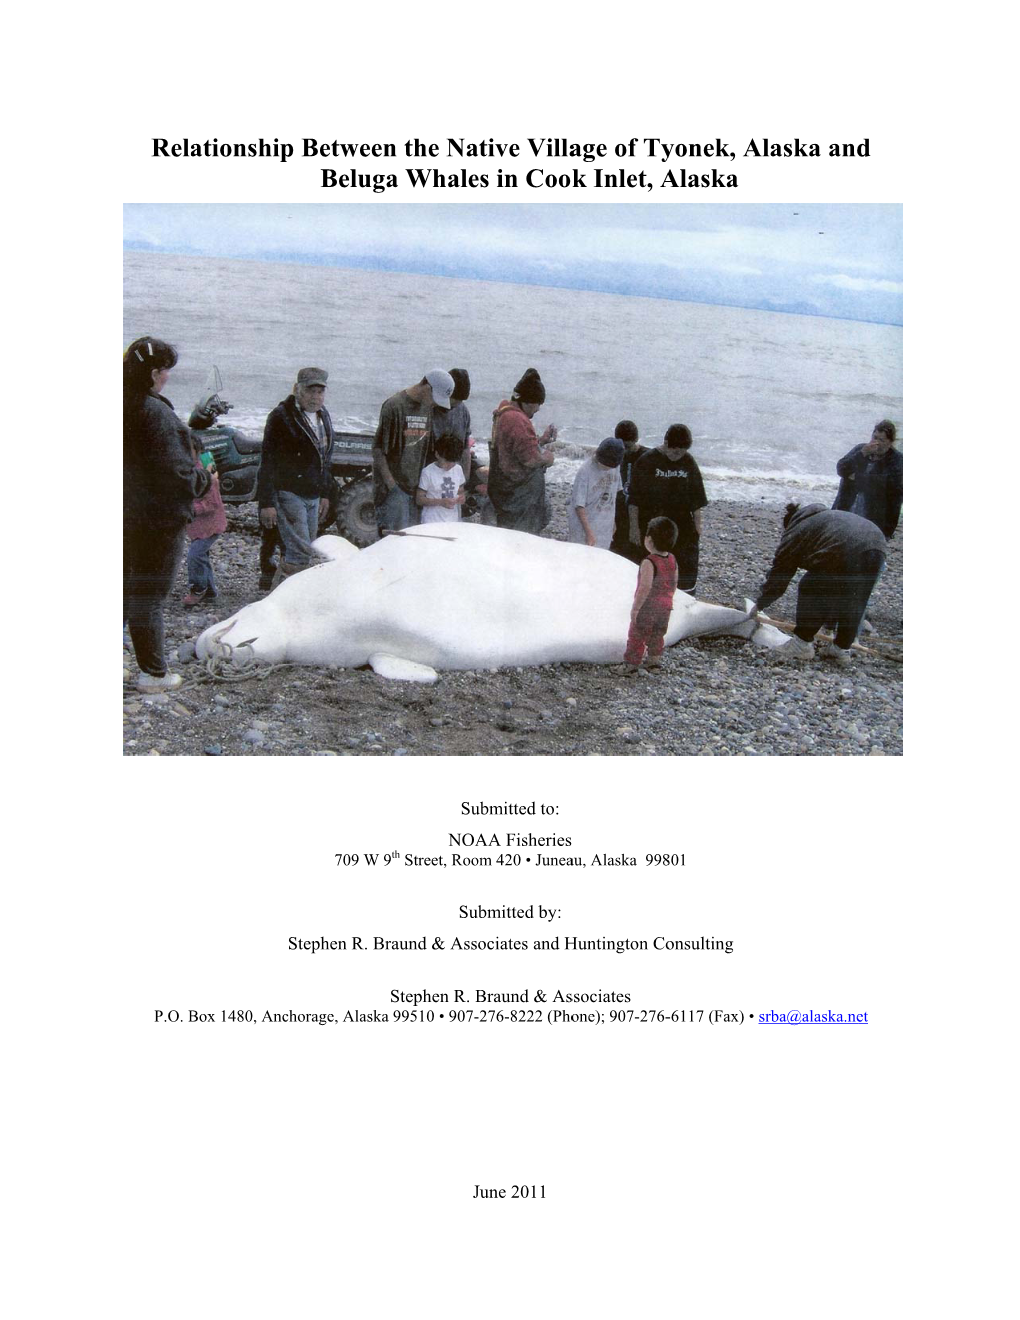 Relationship Between the Native Village of Tyonek, Alaska and Beluga Whales in Cook Inlet, Alaska